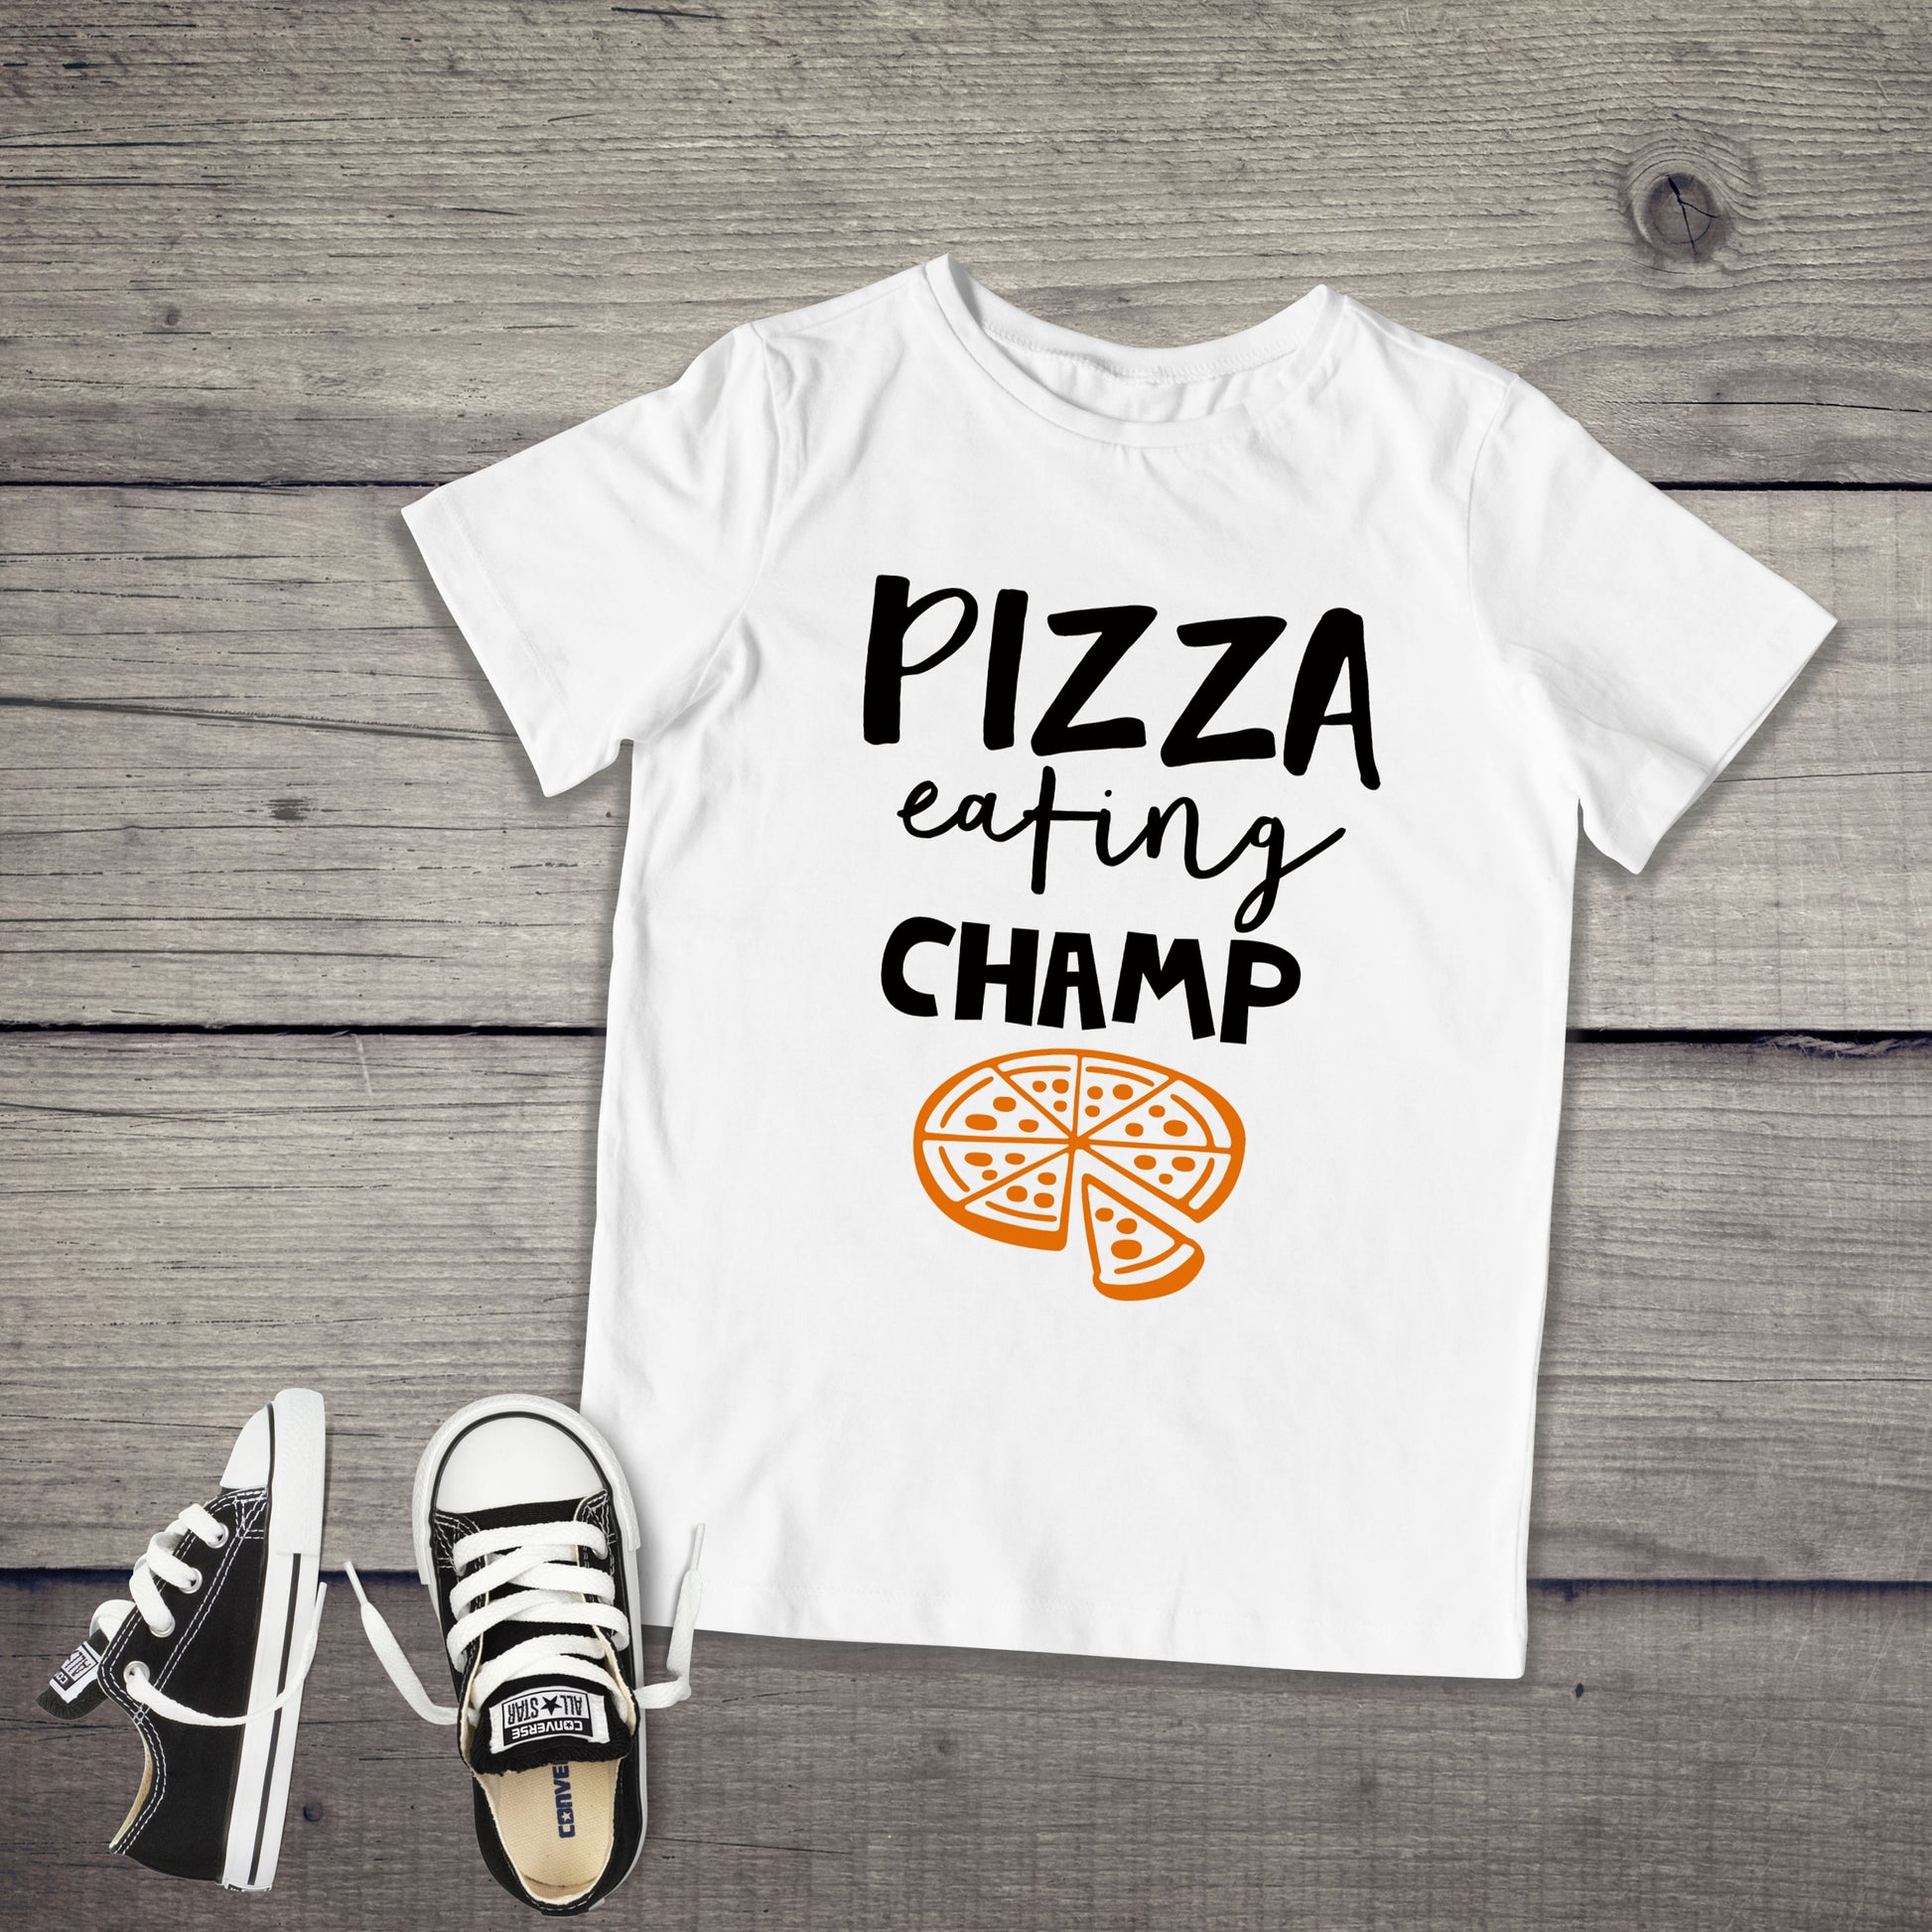 Pizza Eating Champ Infant, Toddler or Kids Shirt or Bodysuit - Cute Toddler Shirt - baby led weaning - pizza party shirt - toddler boy shirt